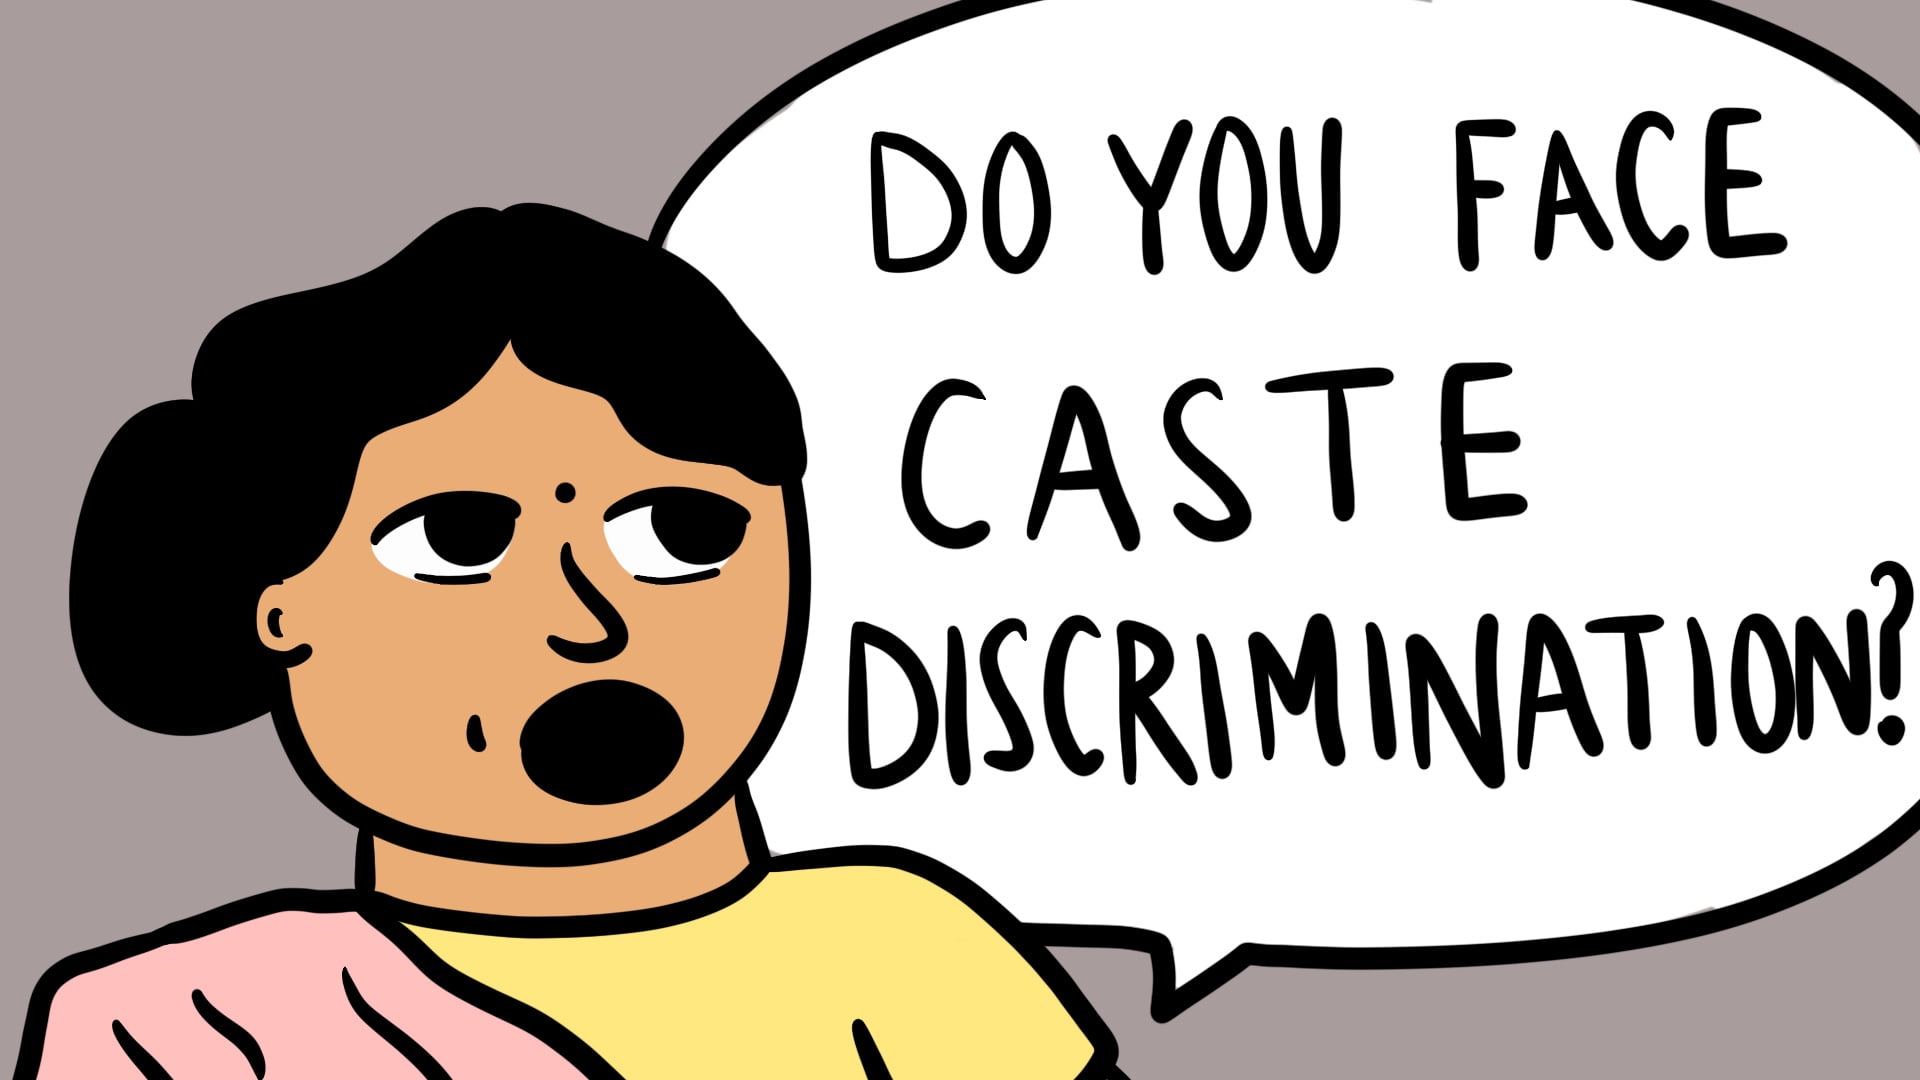 Woman asking 'Do you face caste discrimination?'